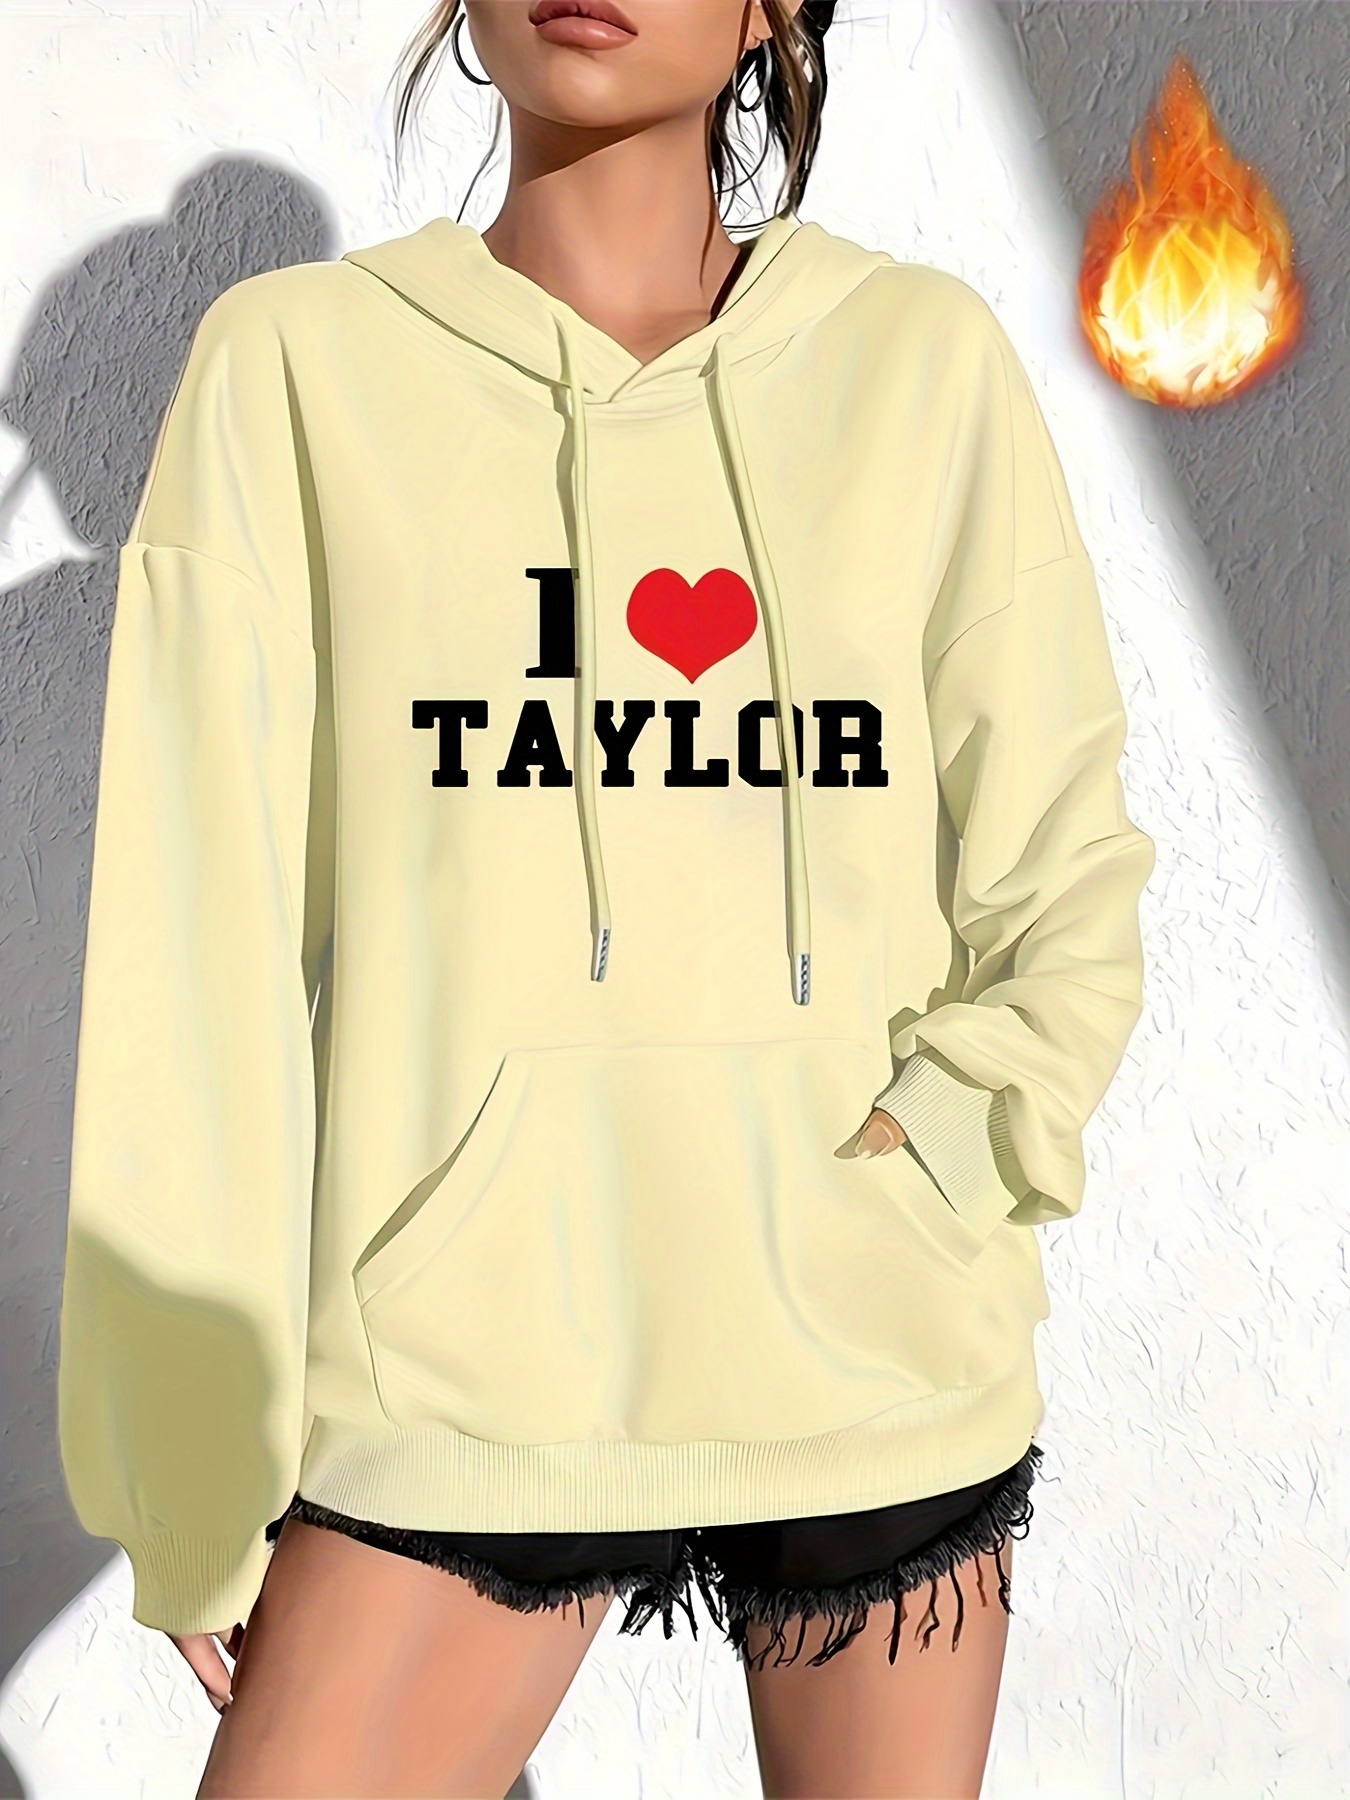 Taylor Swift Sweatshirts & Hoodies for Sale